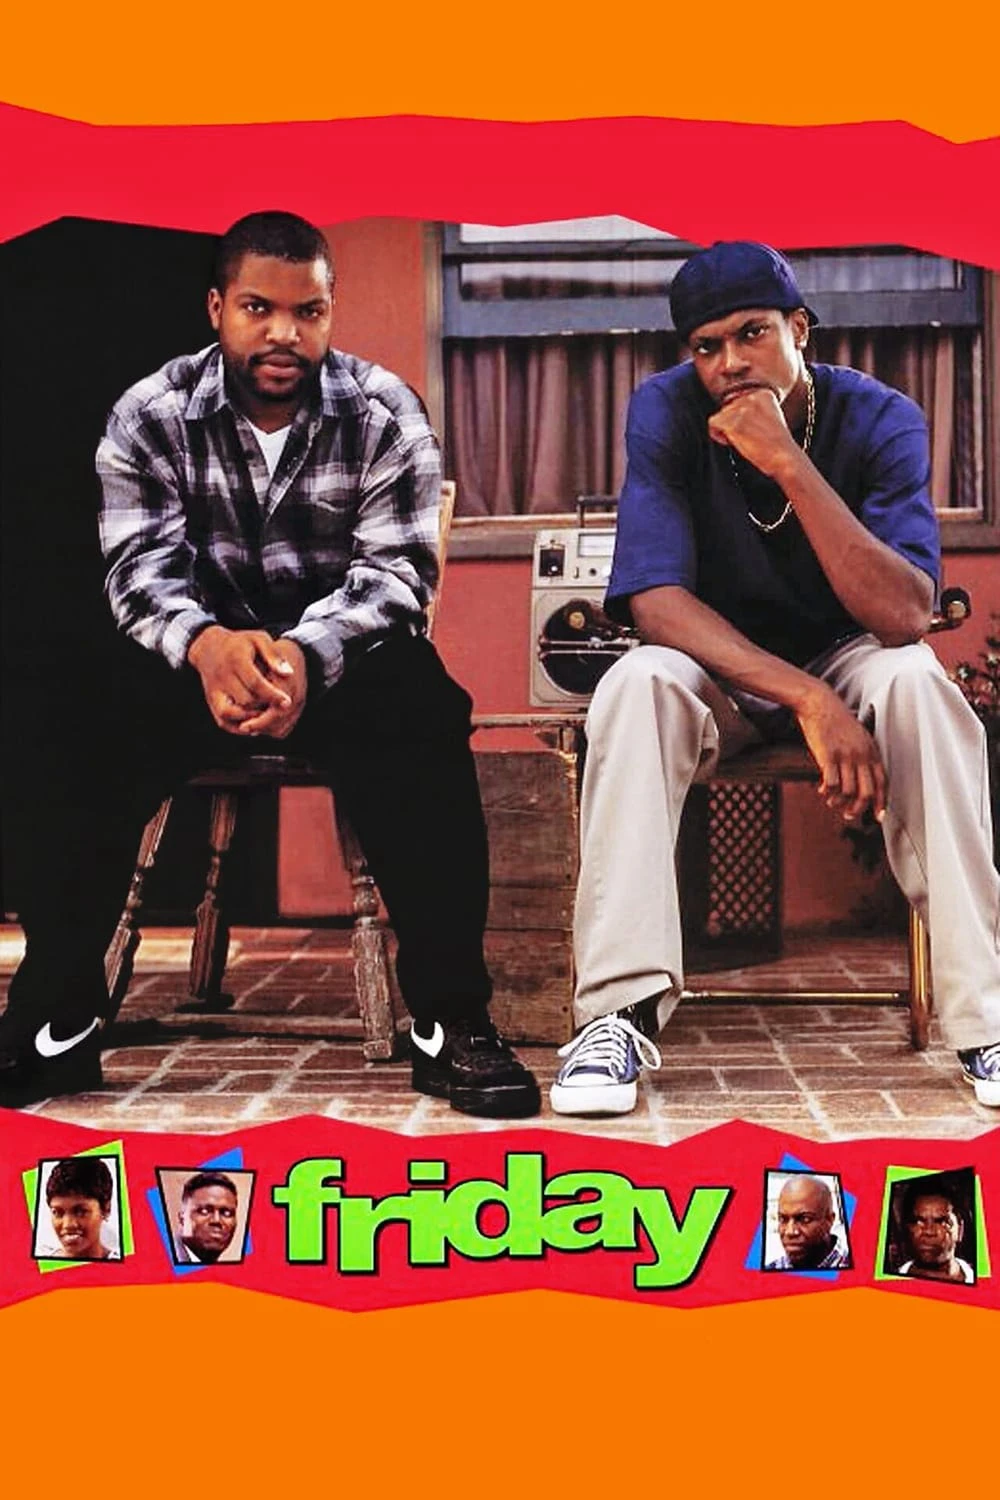 Friday | Friday (1995)